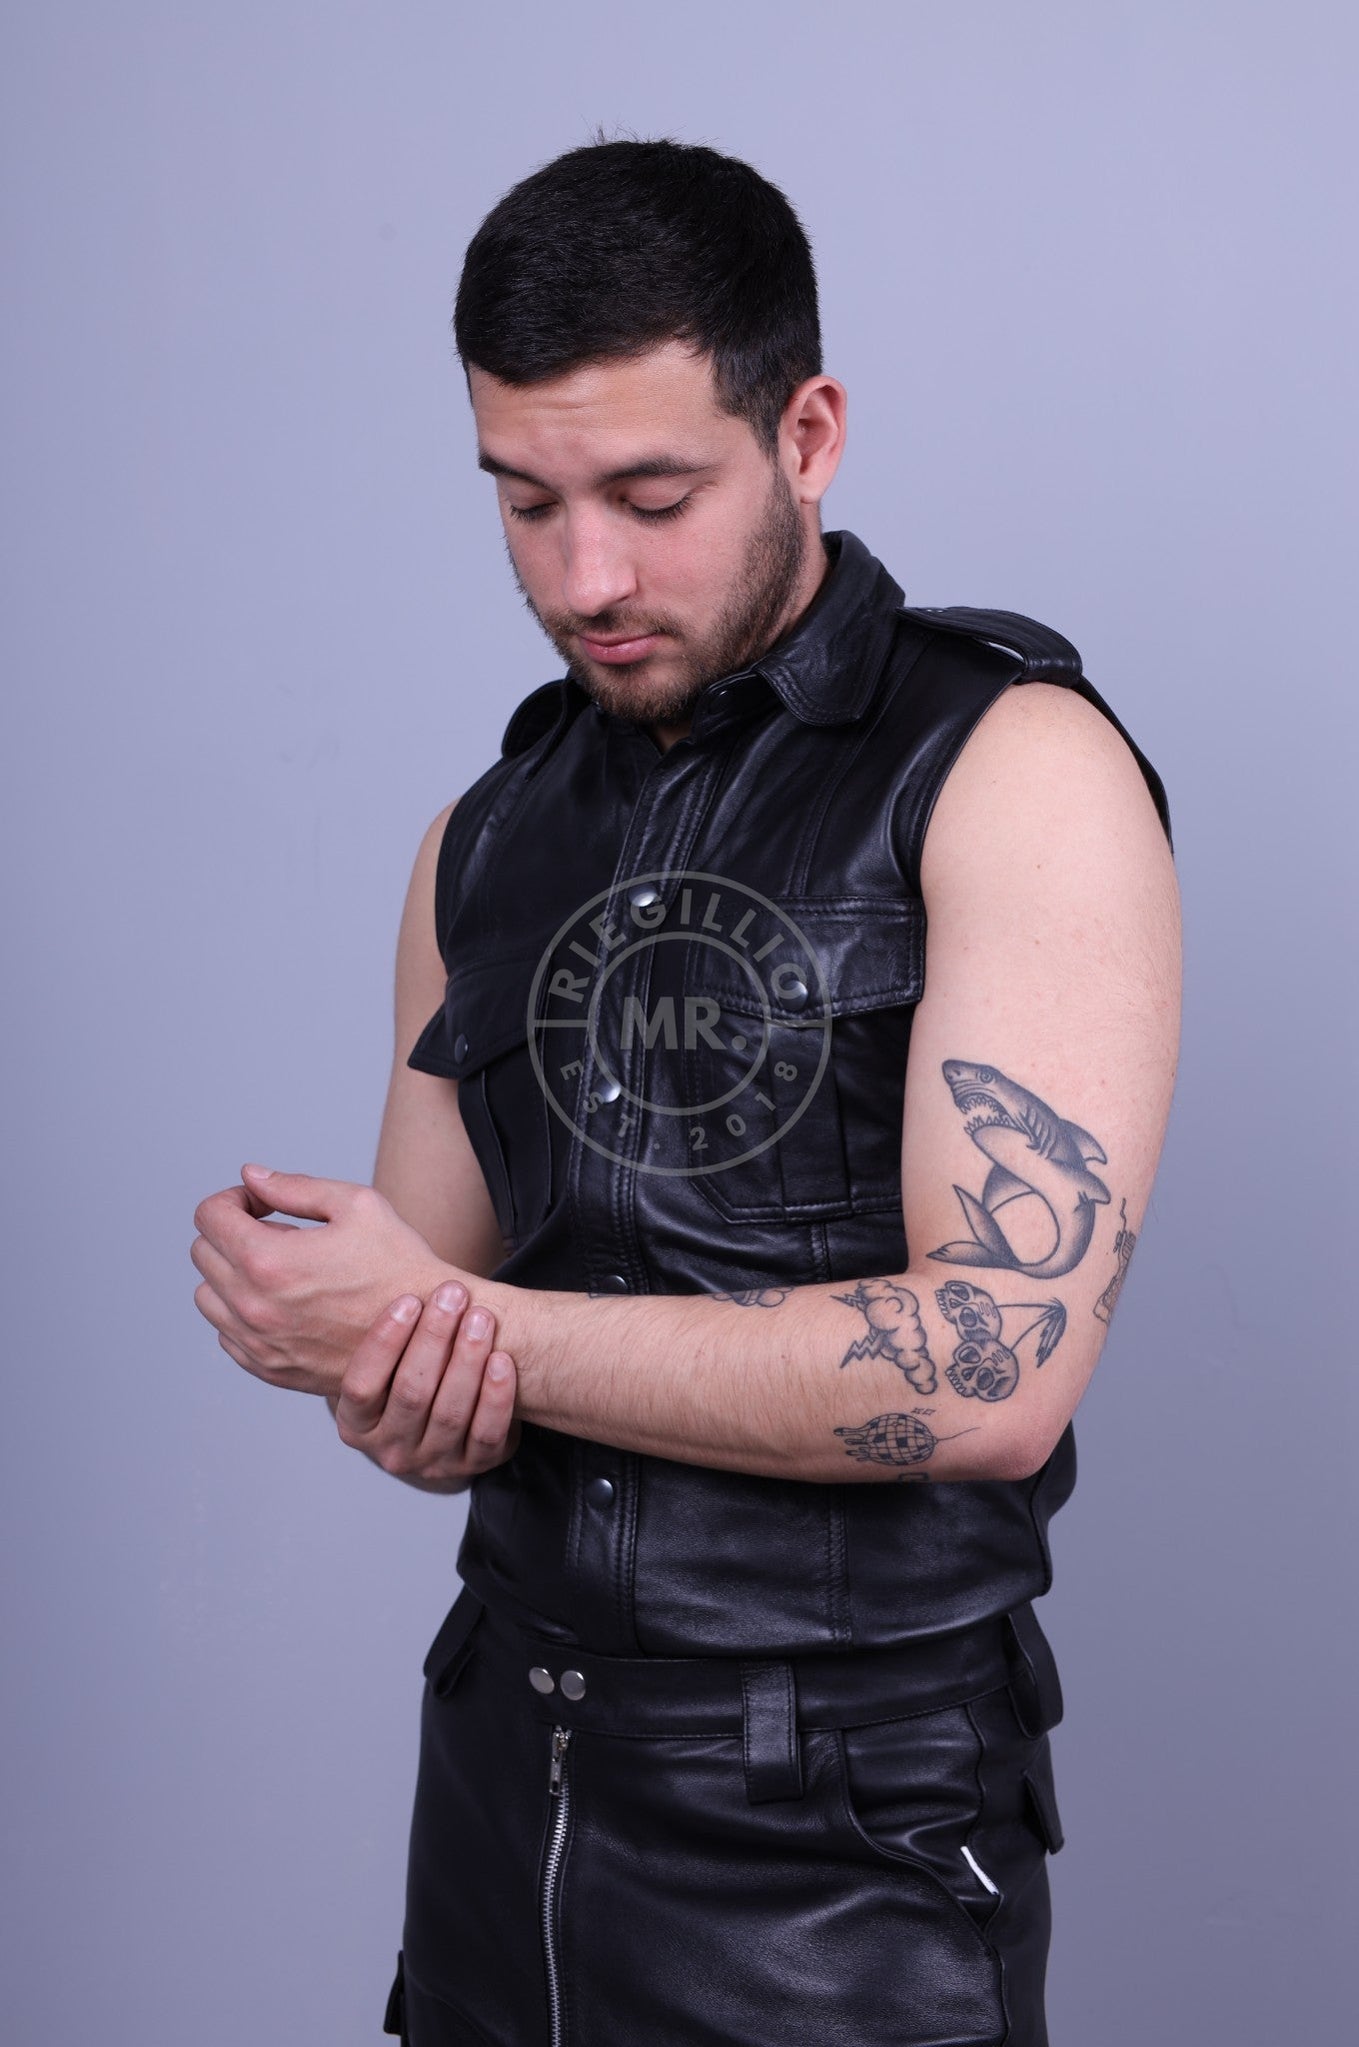 Black Leather Shirt - Sleeveless at MR. Riegillio